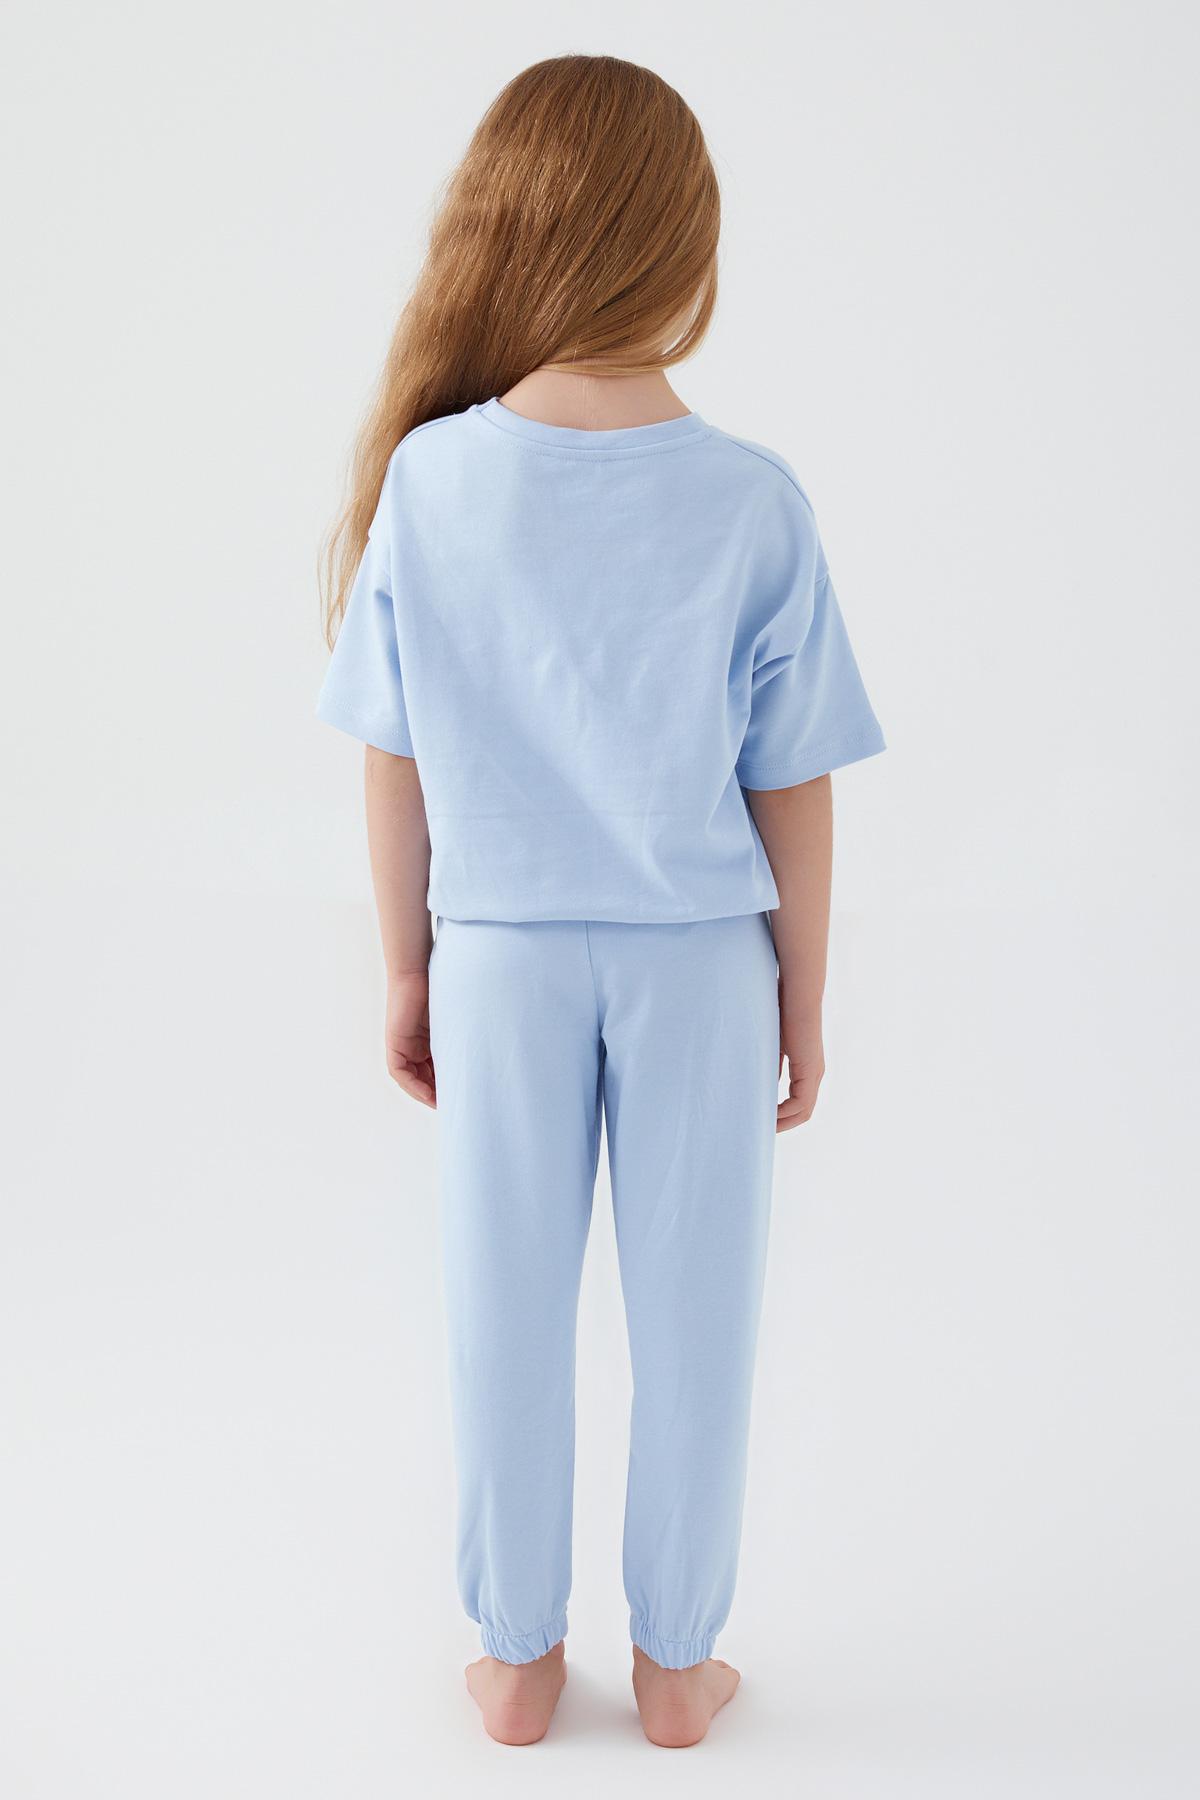 Selected image for U.S. POLO ASSN. Pidžama za devojčice US1418-G plava